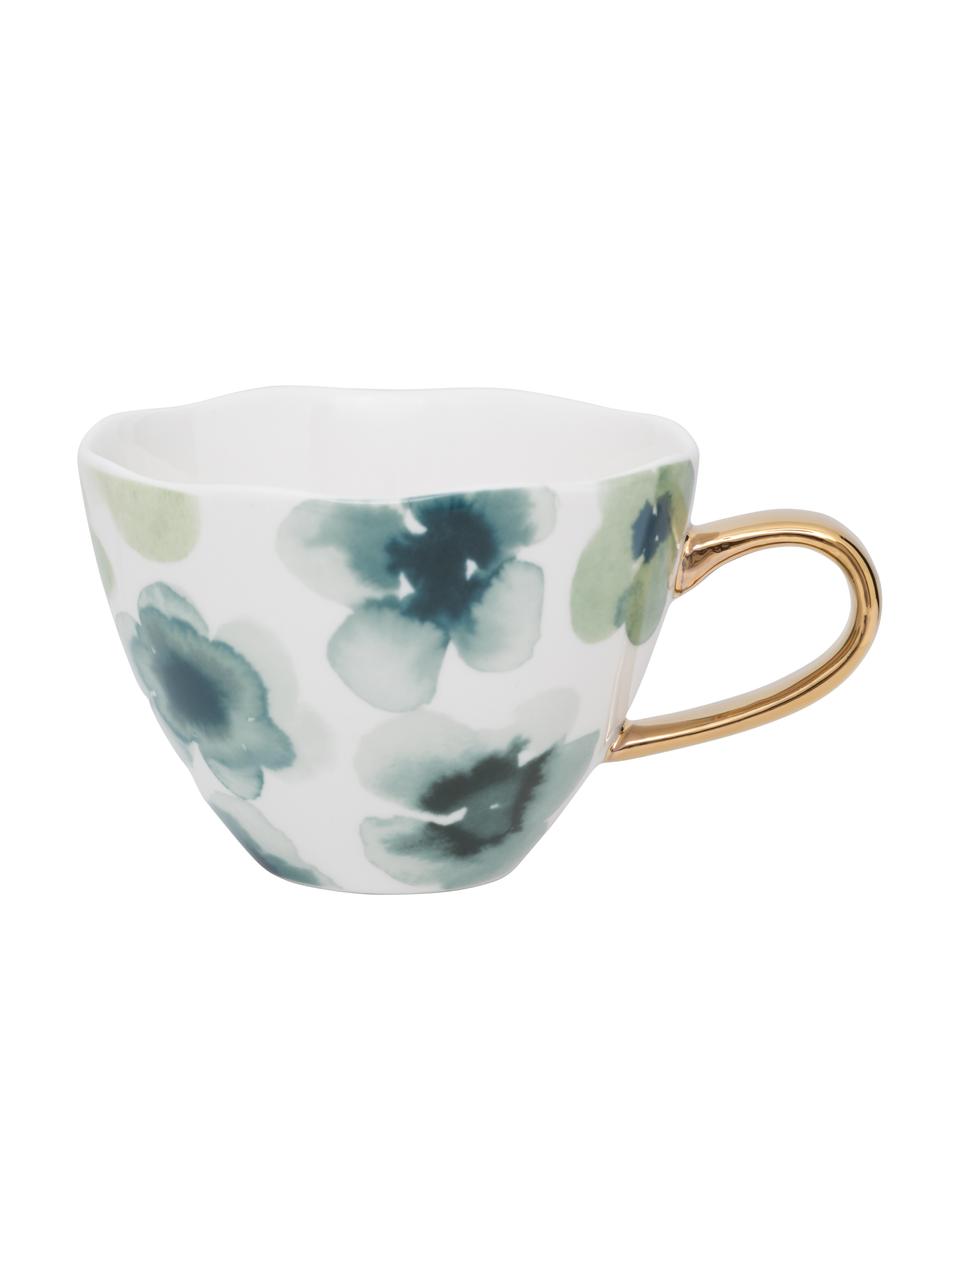 Bemalte Tasse Good Morning mit goldenem Griff, New Bone China, Weiß, Grün, Blau, Goldfarben, Ø 11 x H 8 cm, 350 ml